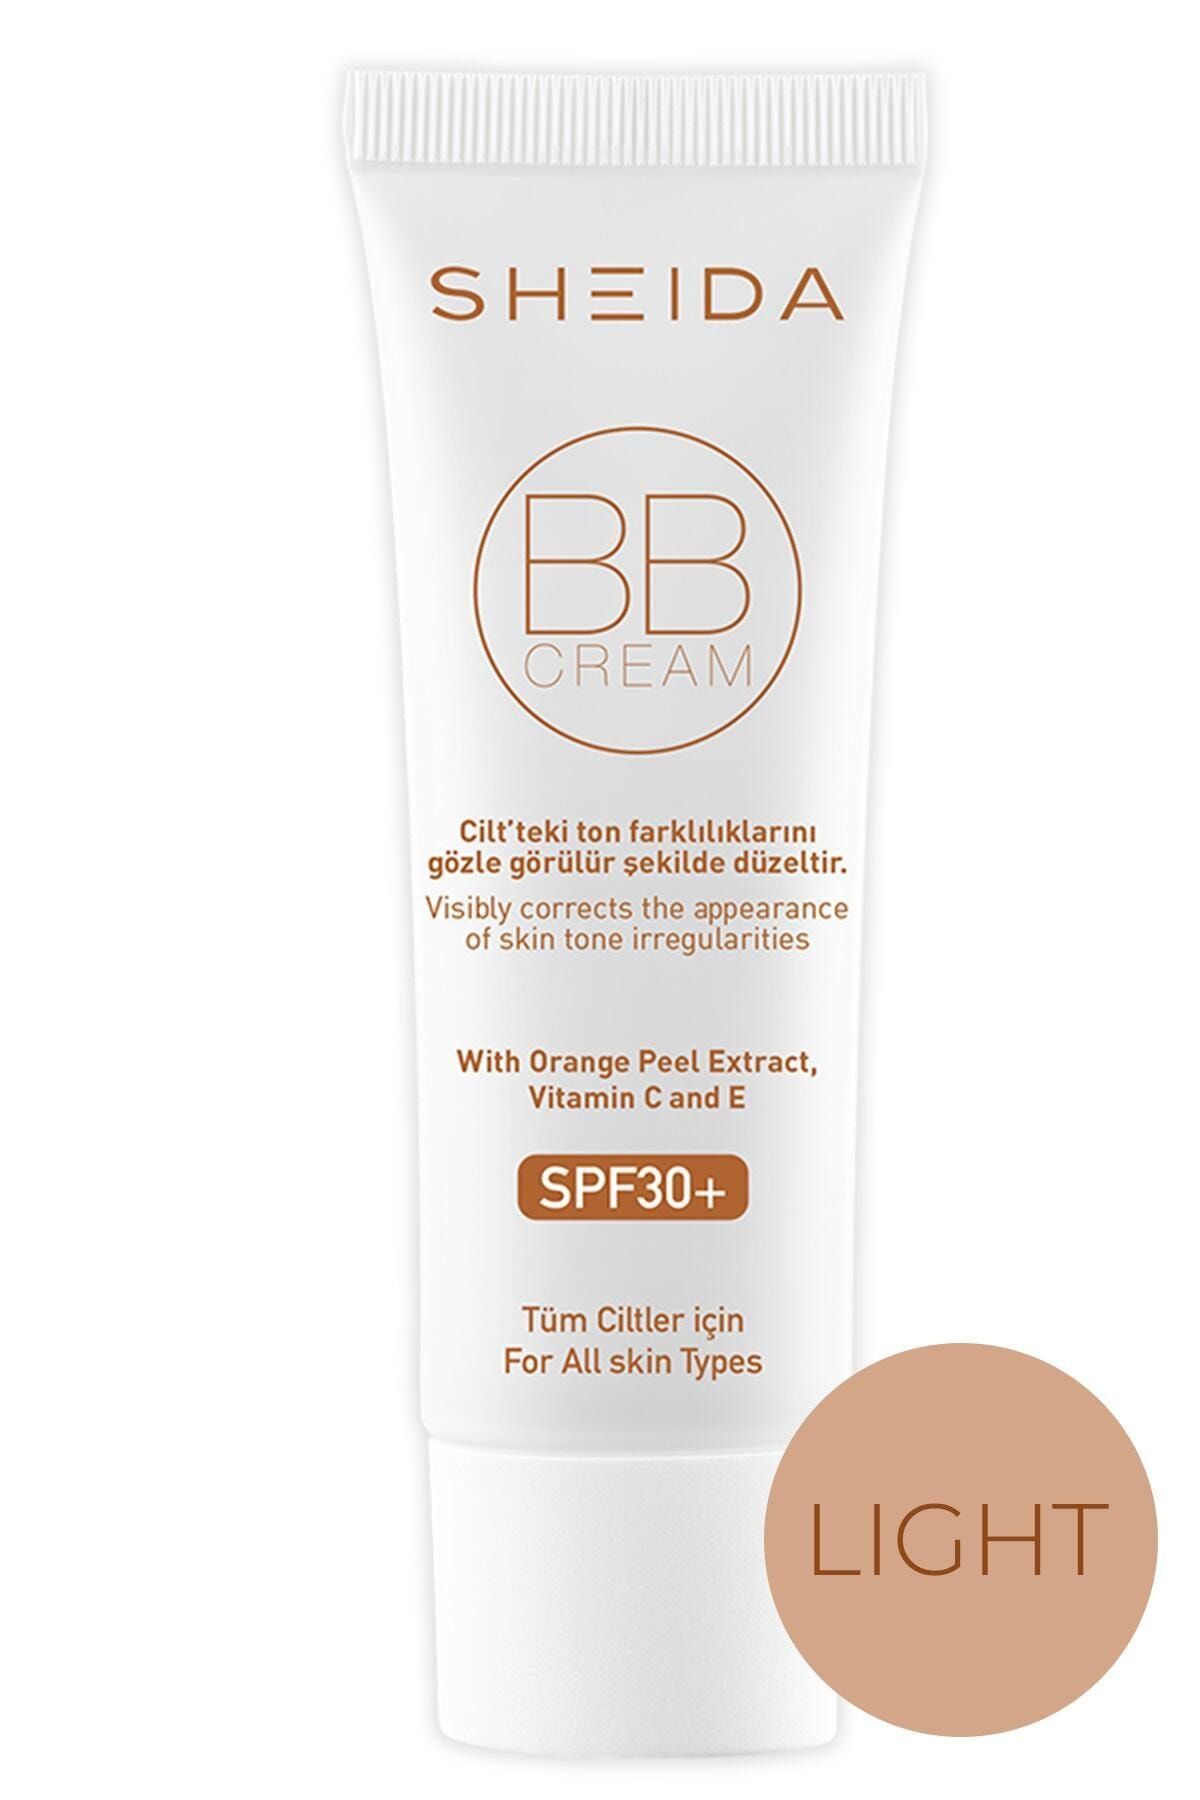 Sheida Bb Cream Lıght 50ml